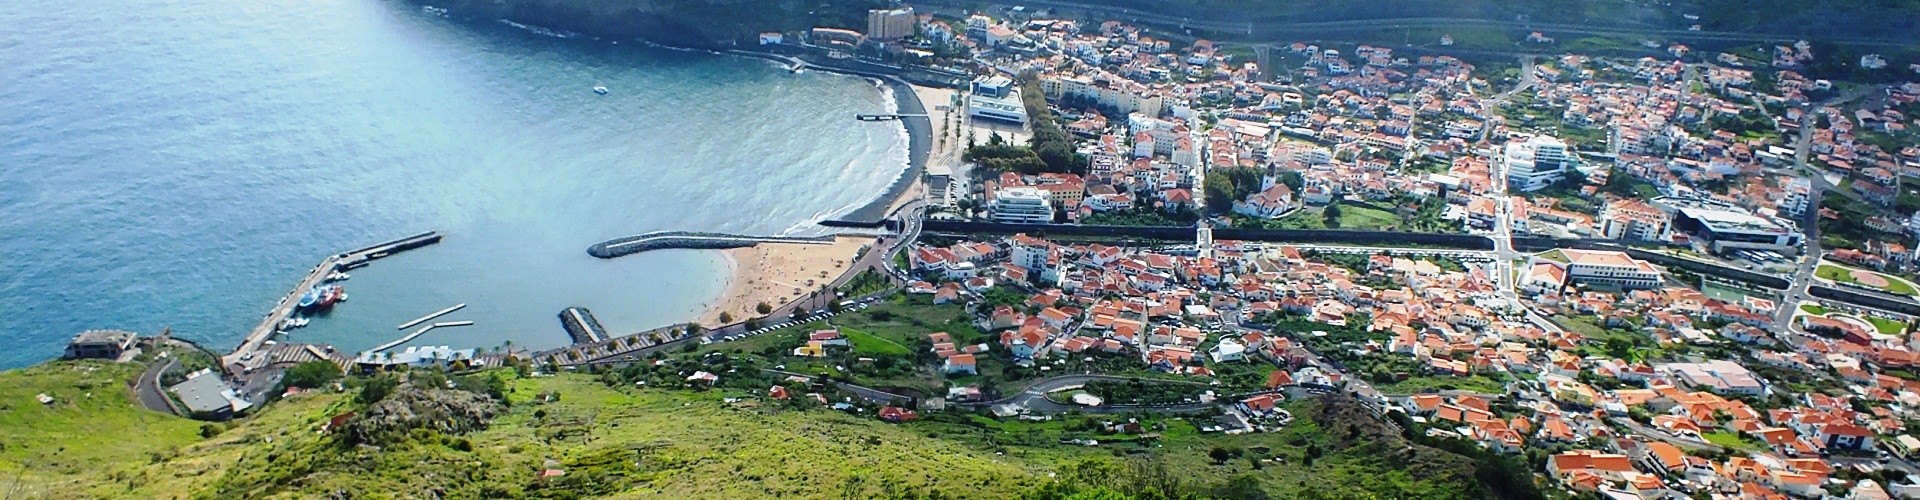 Pico do Facho viewpoint in Machico, Madeira Island